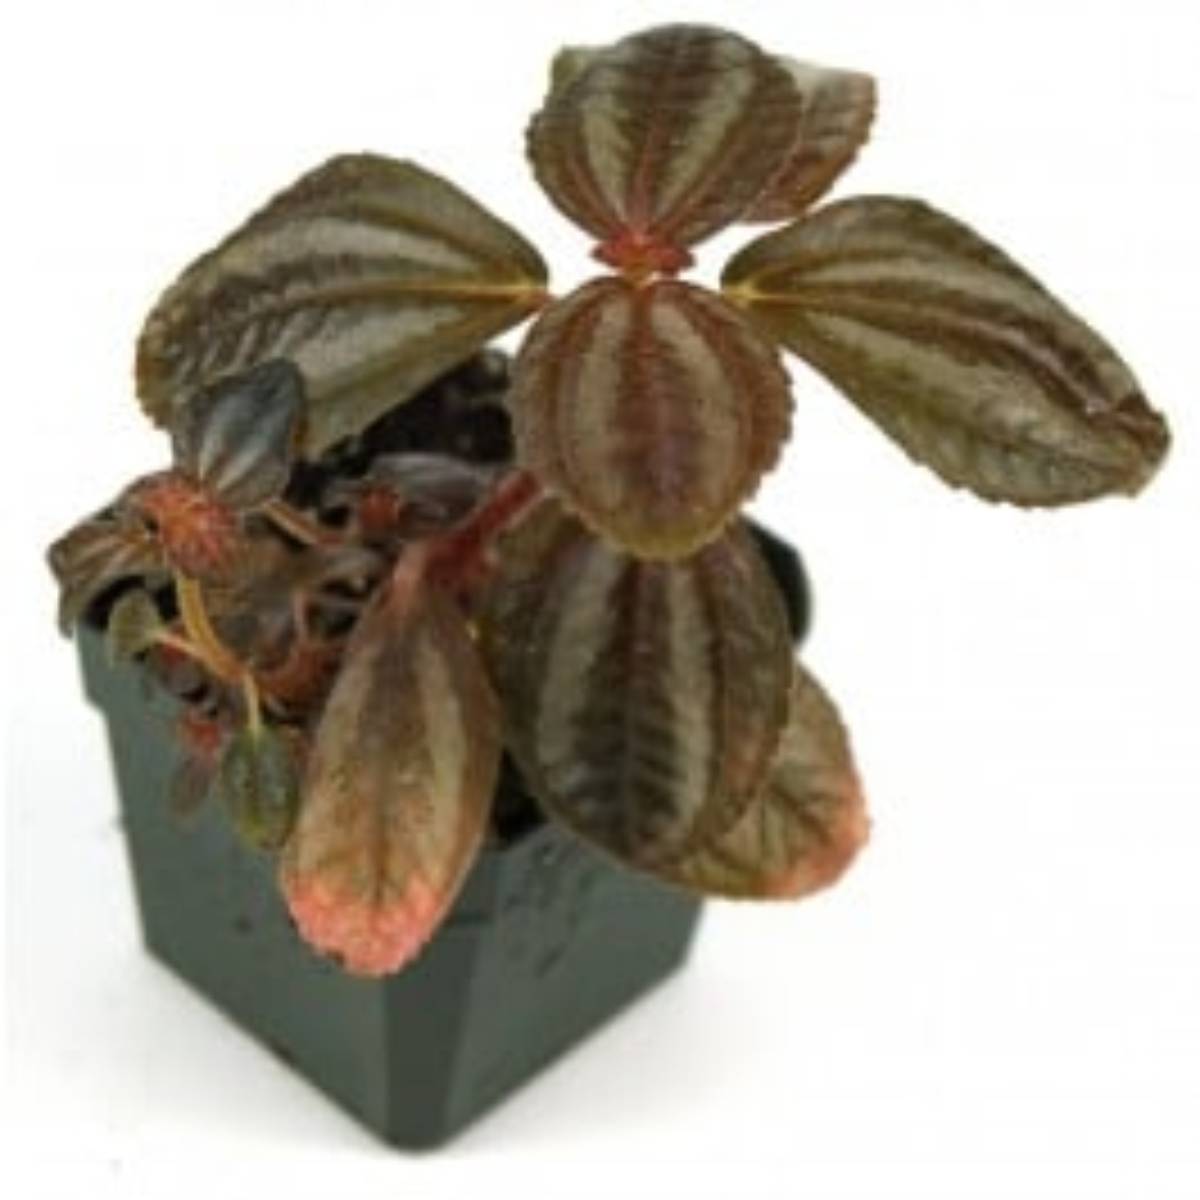 Pilea, a great terrarium plant